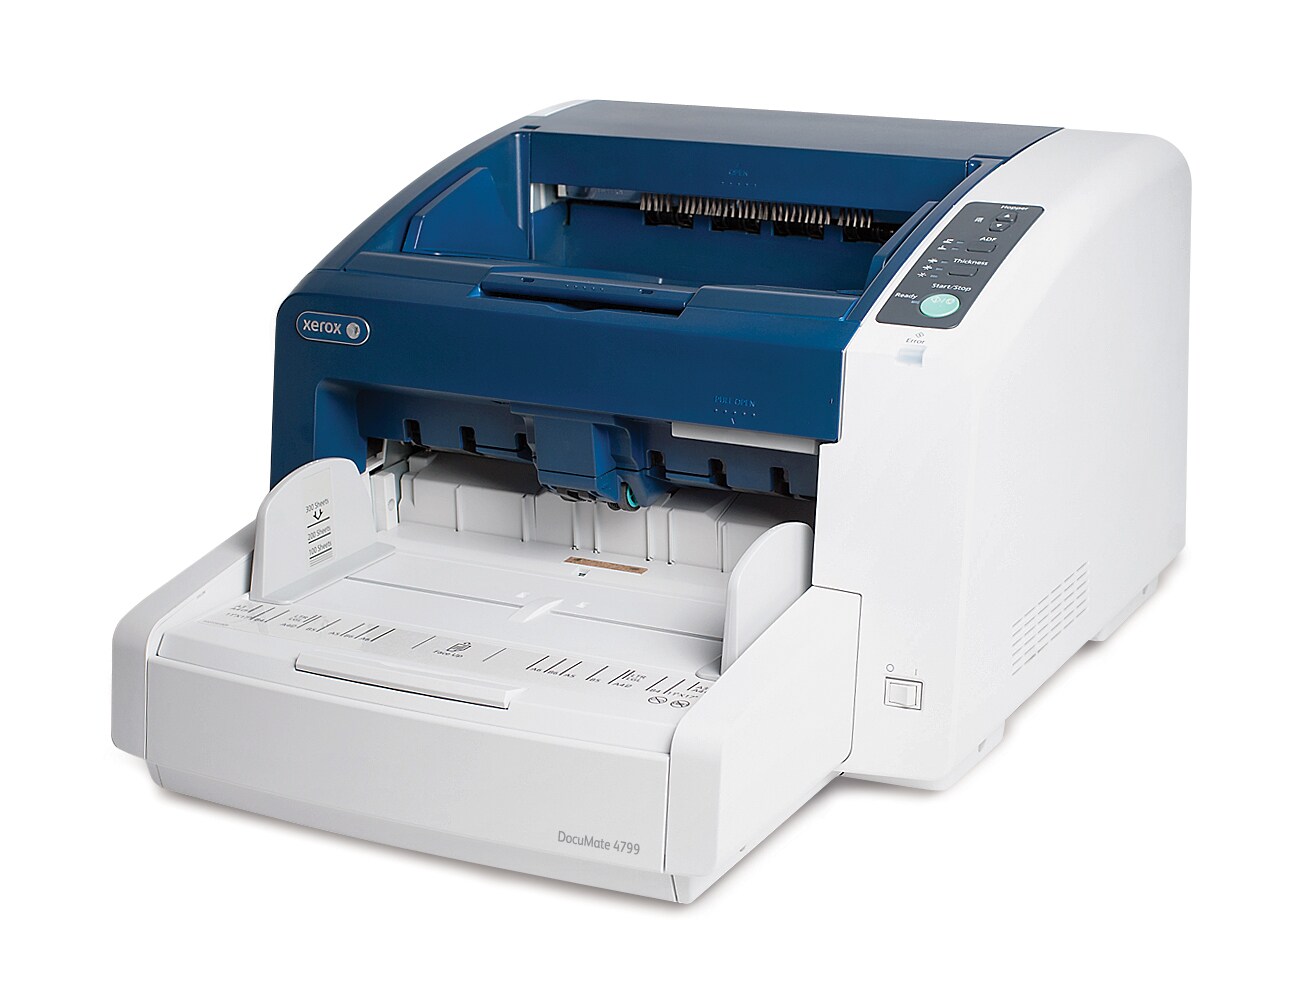 Xerox DocuMate 4799 Production Document Scanner